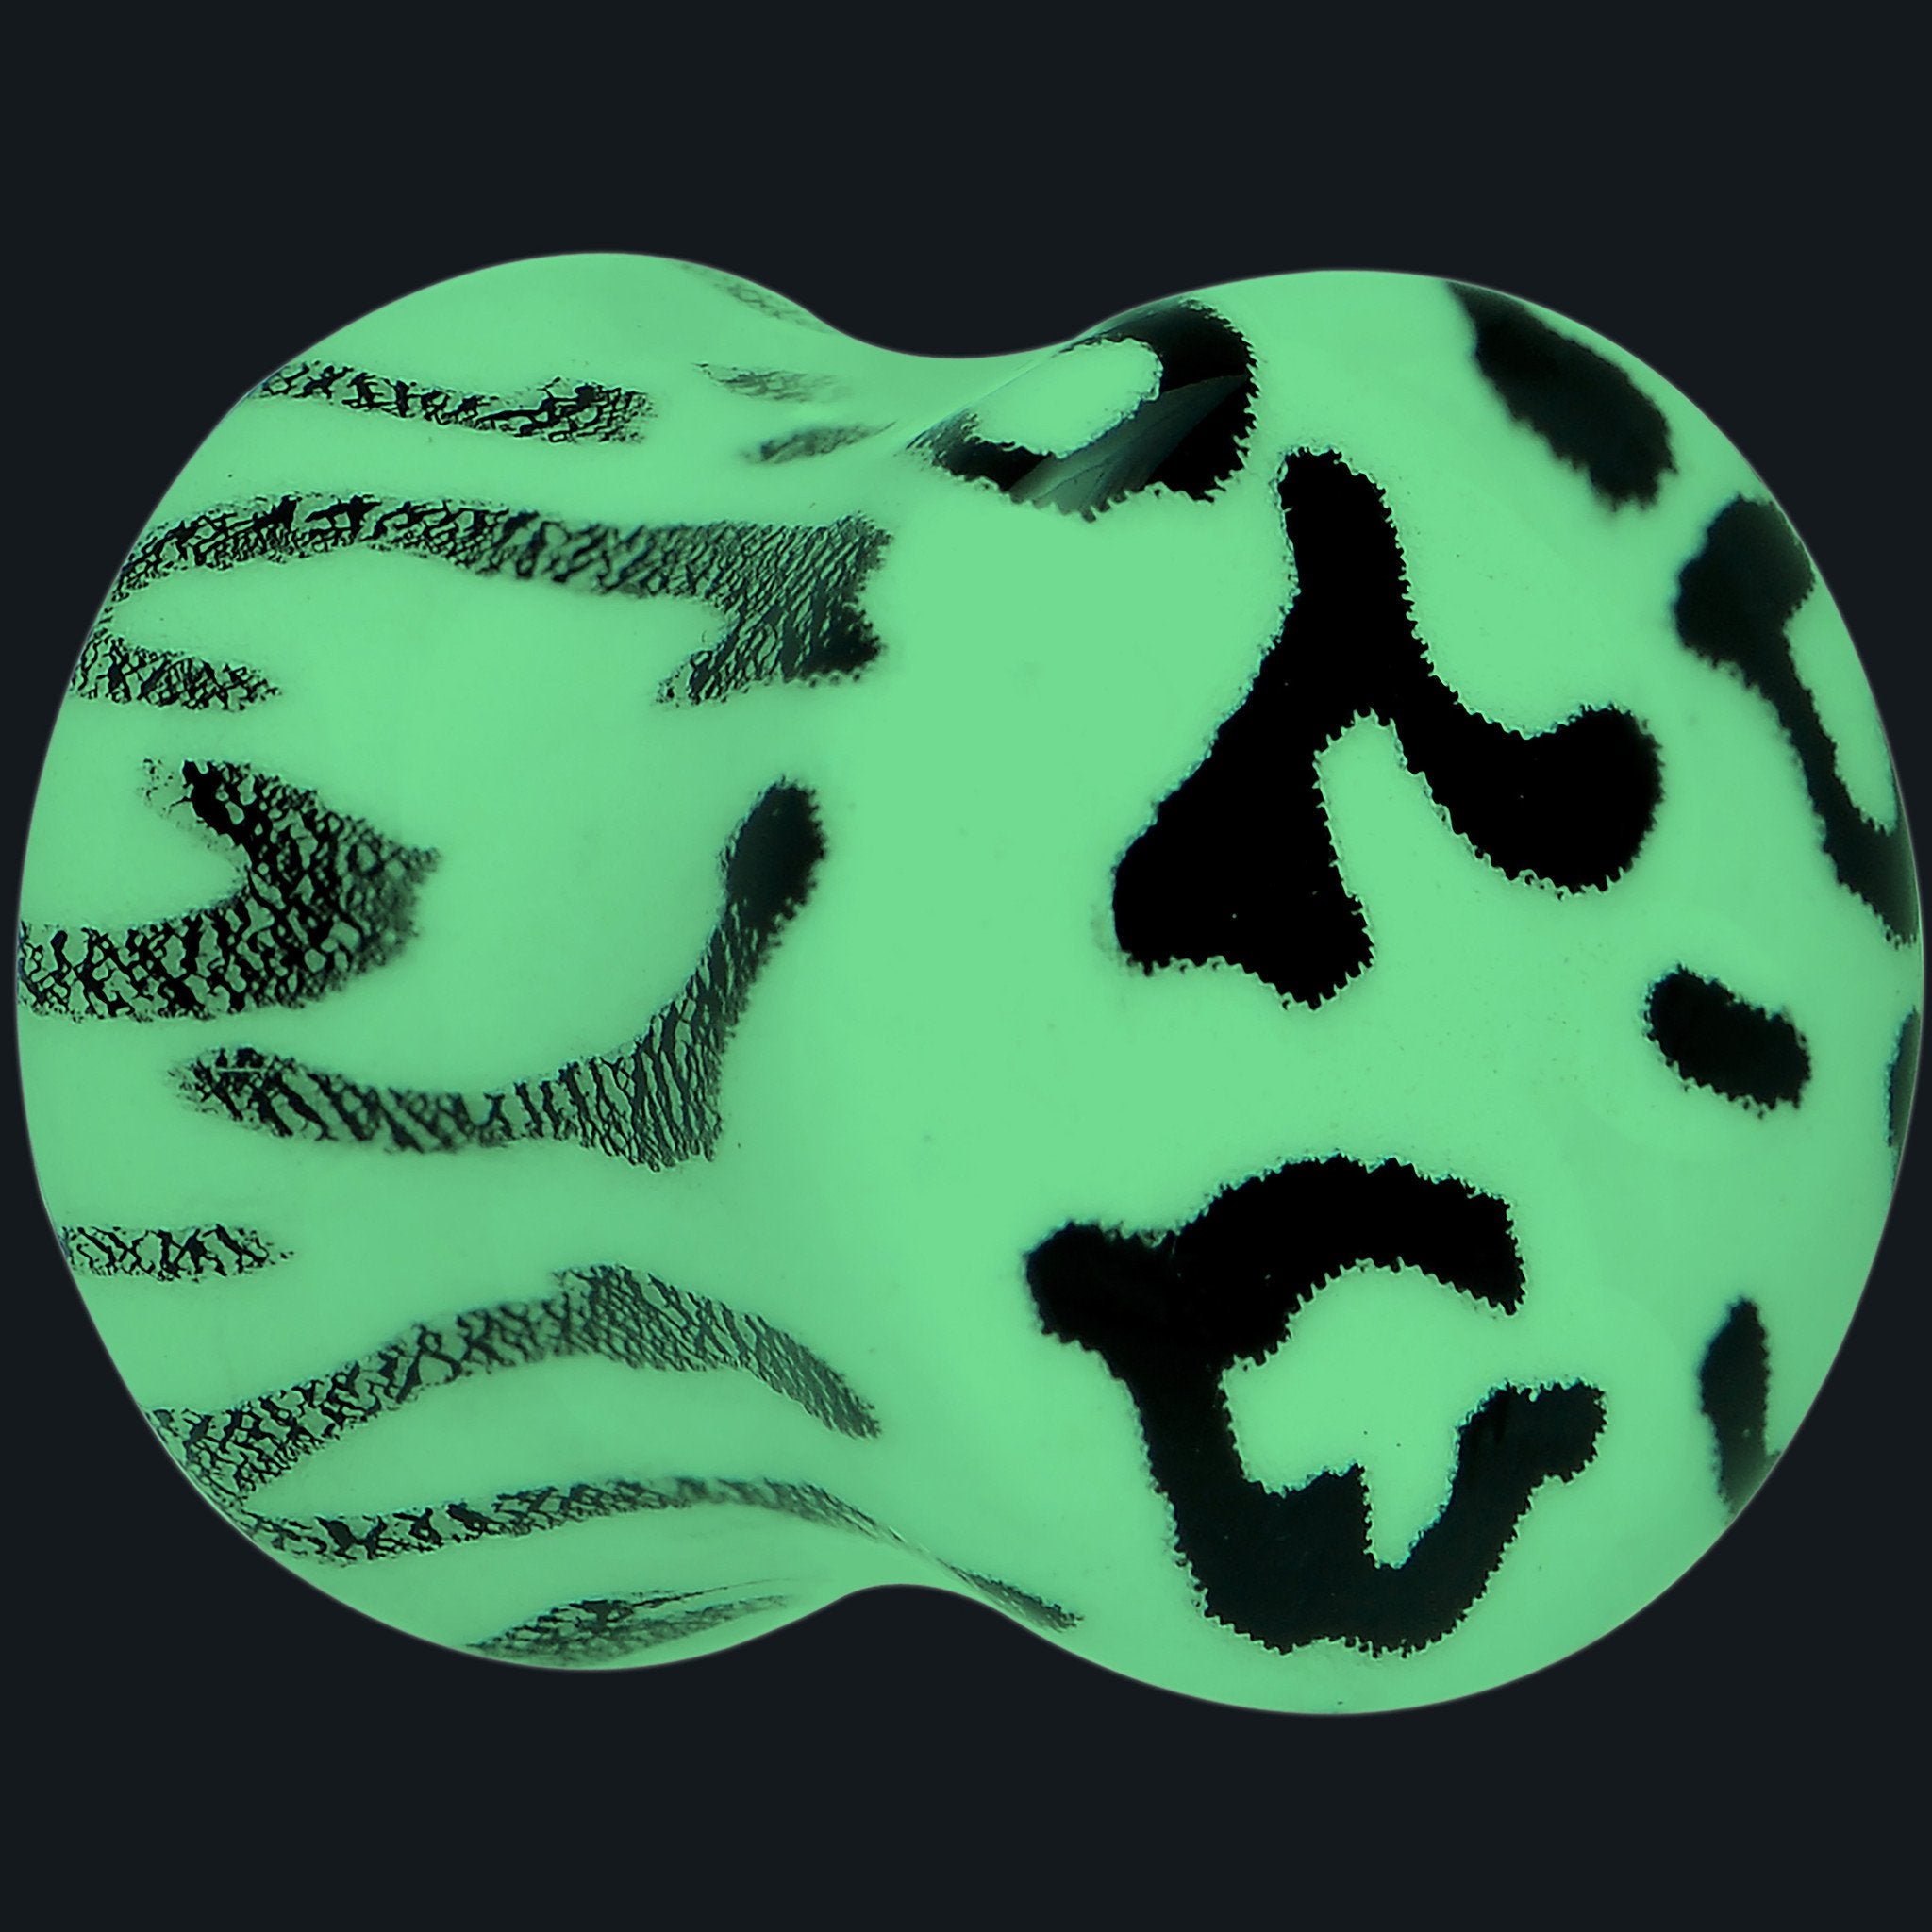 Leopard Print Glow in the Dark Saddle Plug 0 Gauge to 1 Inch